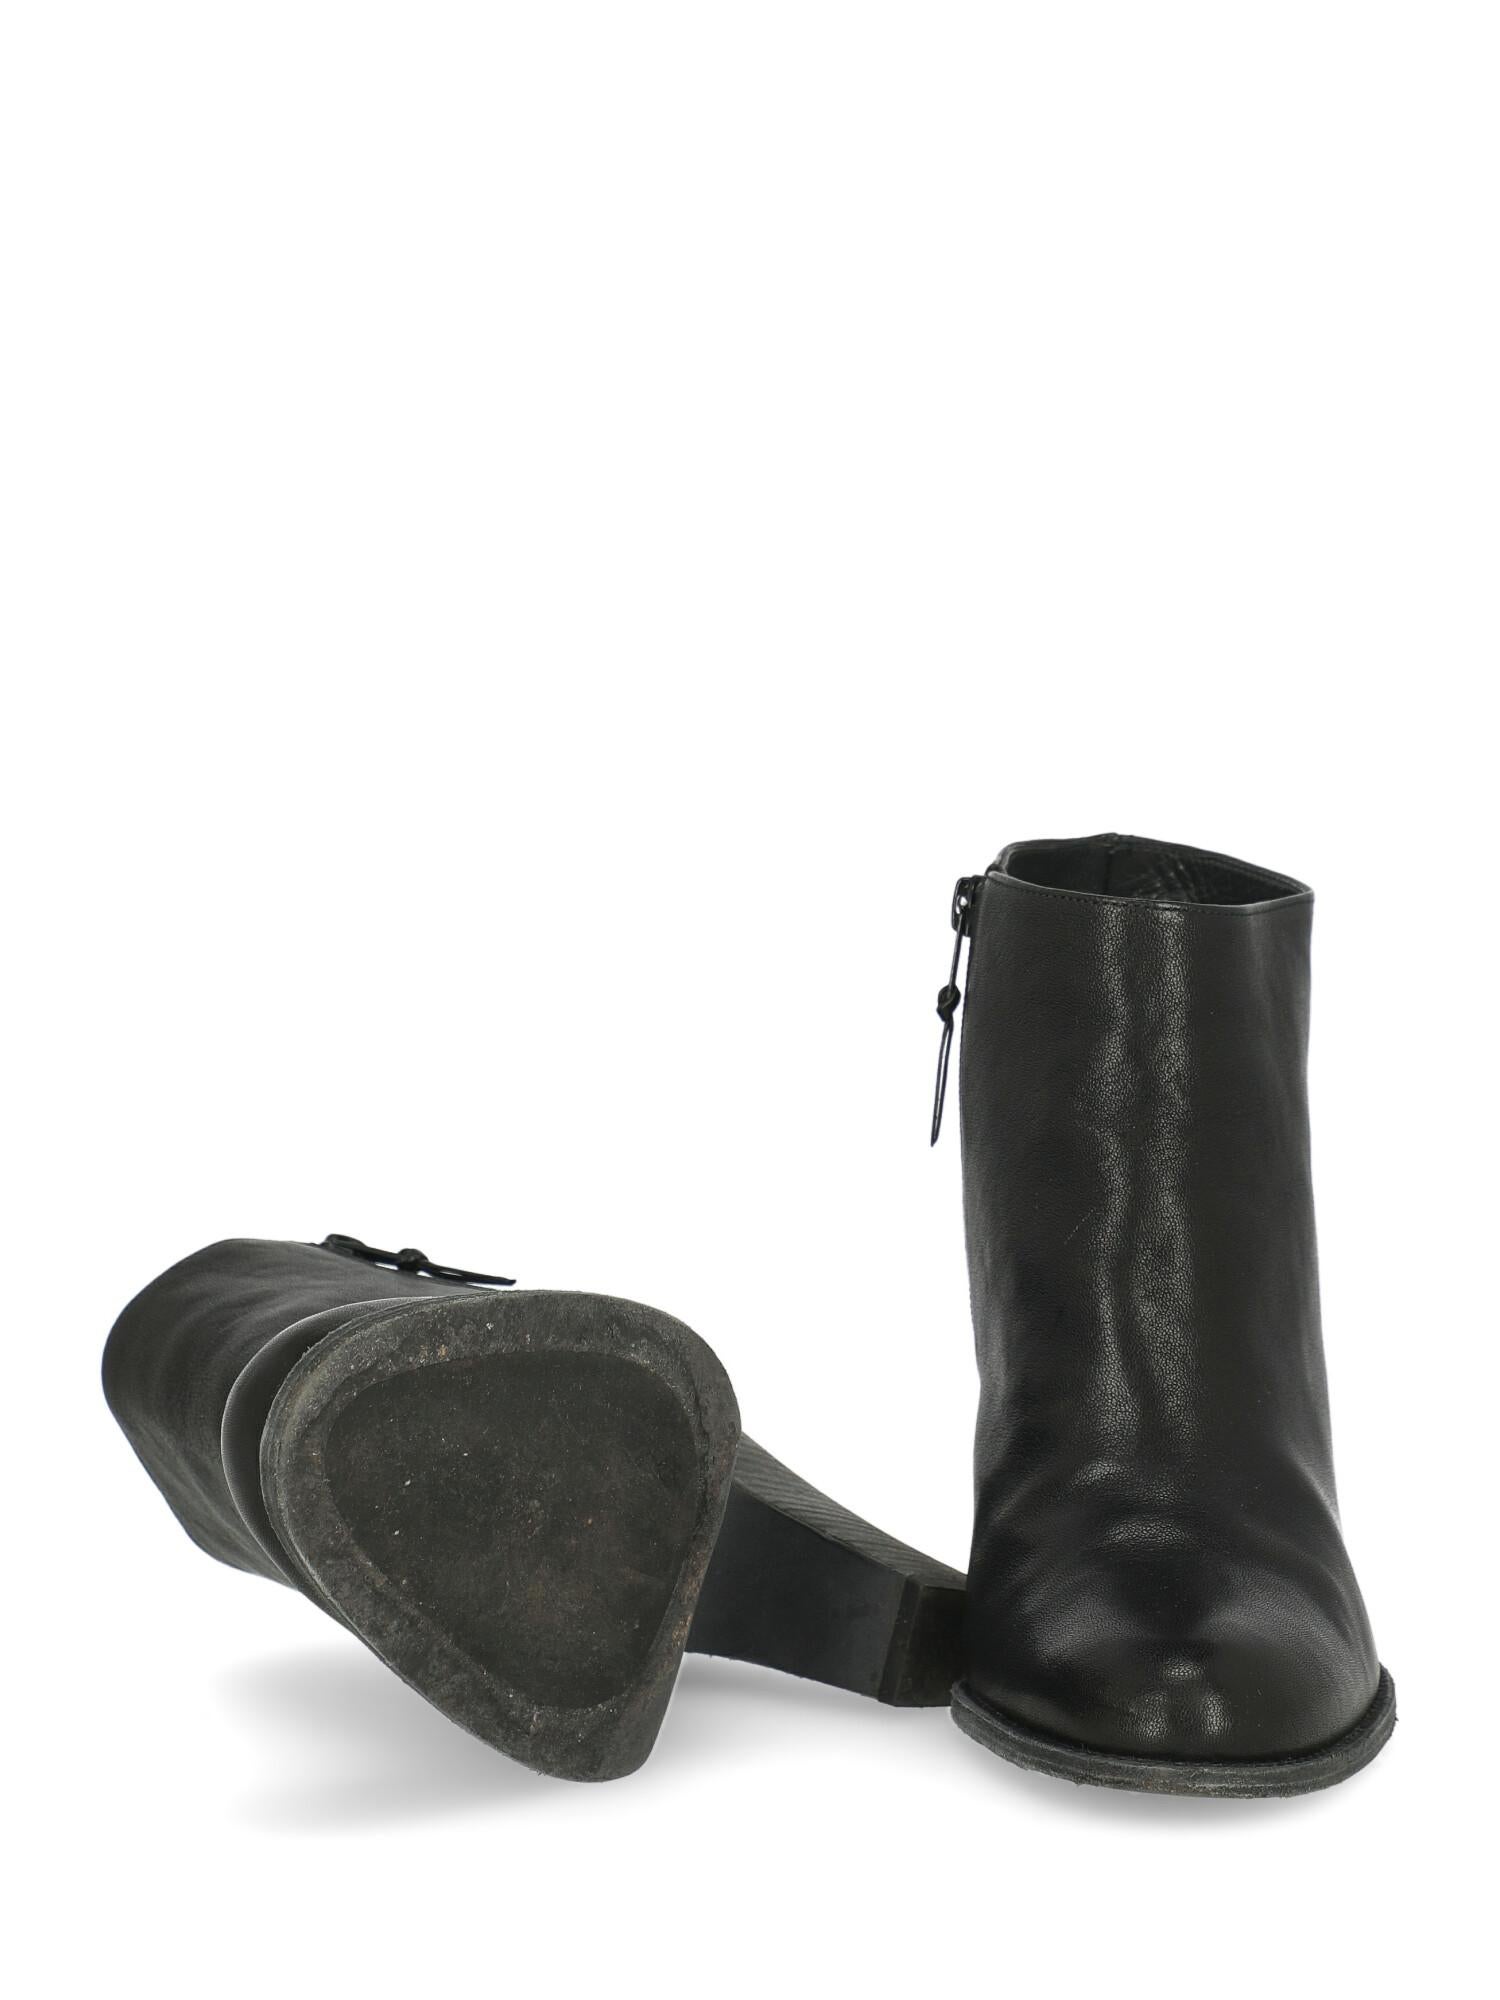 Stuart Weitzman Woman Ankle boots Black Leather IT 39.5 For Sale 1